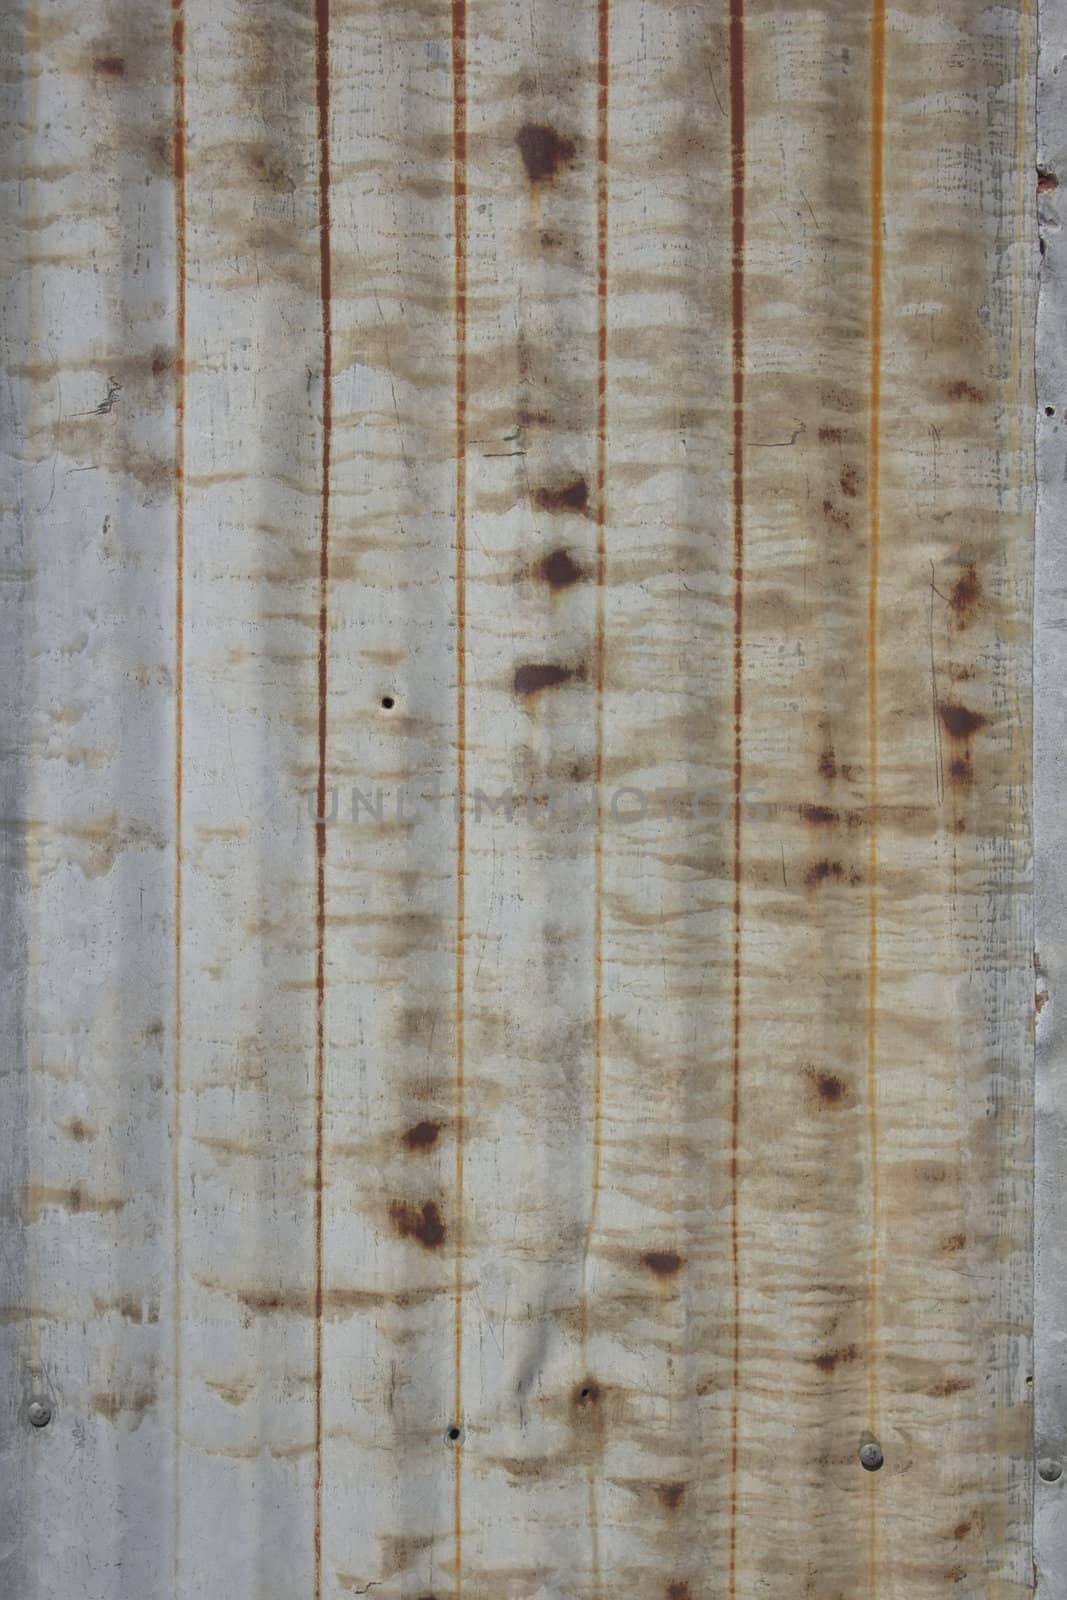 A rusty corrugated iron metal fence close up/ Zinc wall by jeremywhat